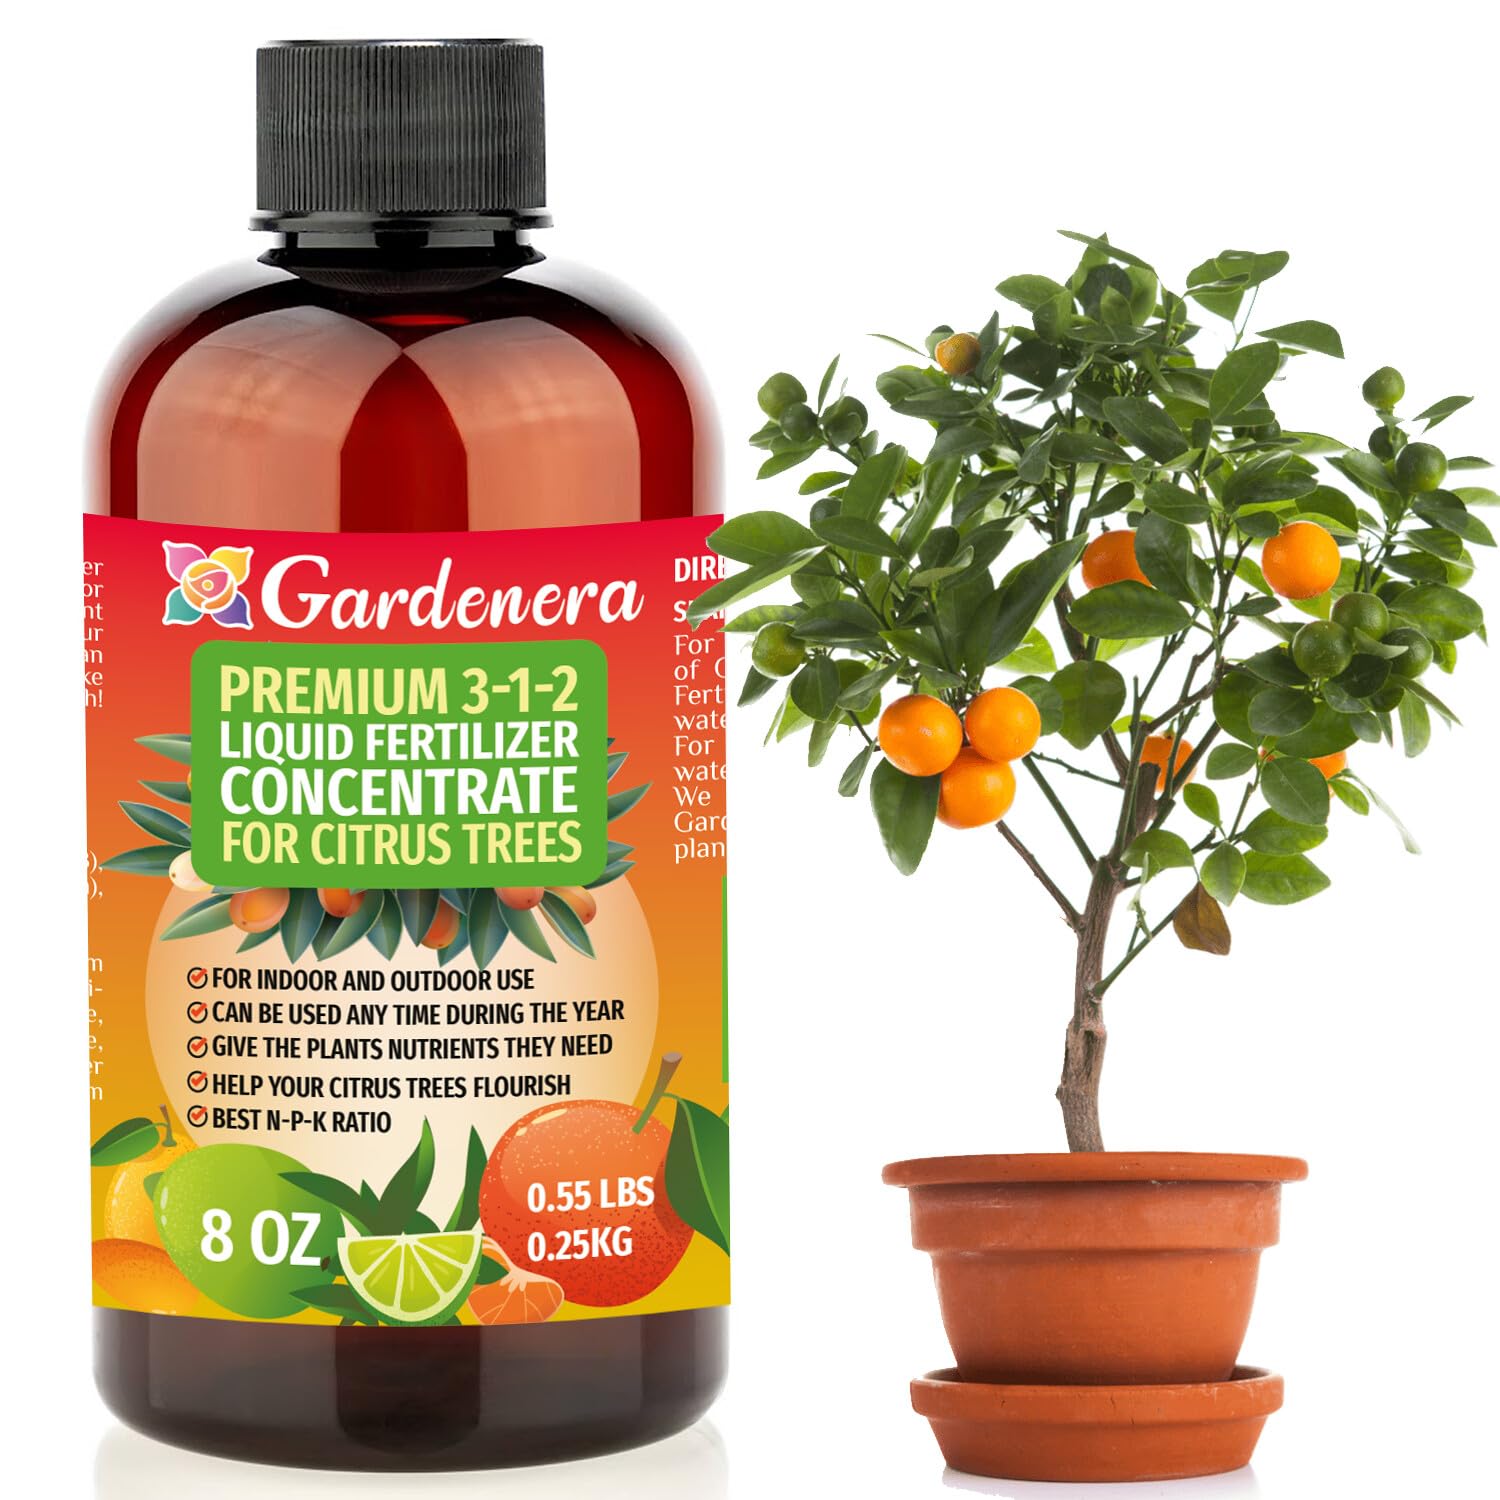 Gardenera 3-1-2 Liquid Fertilizer Concentrate